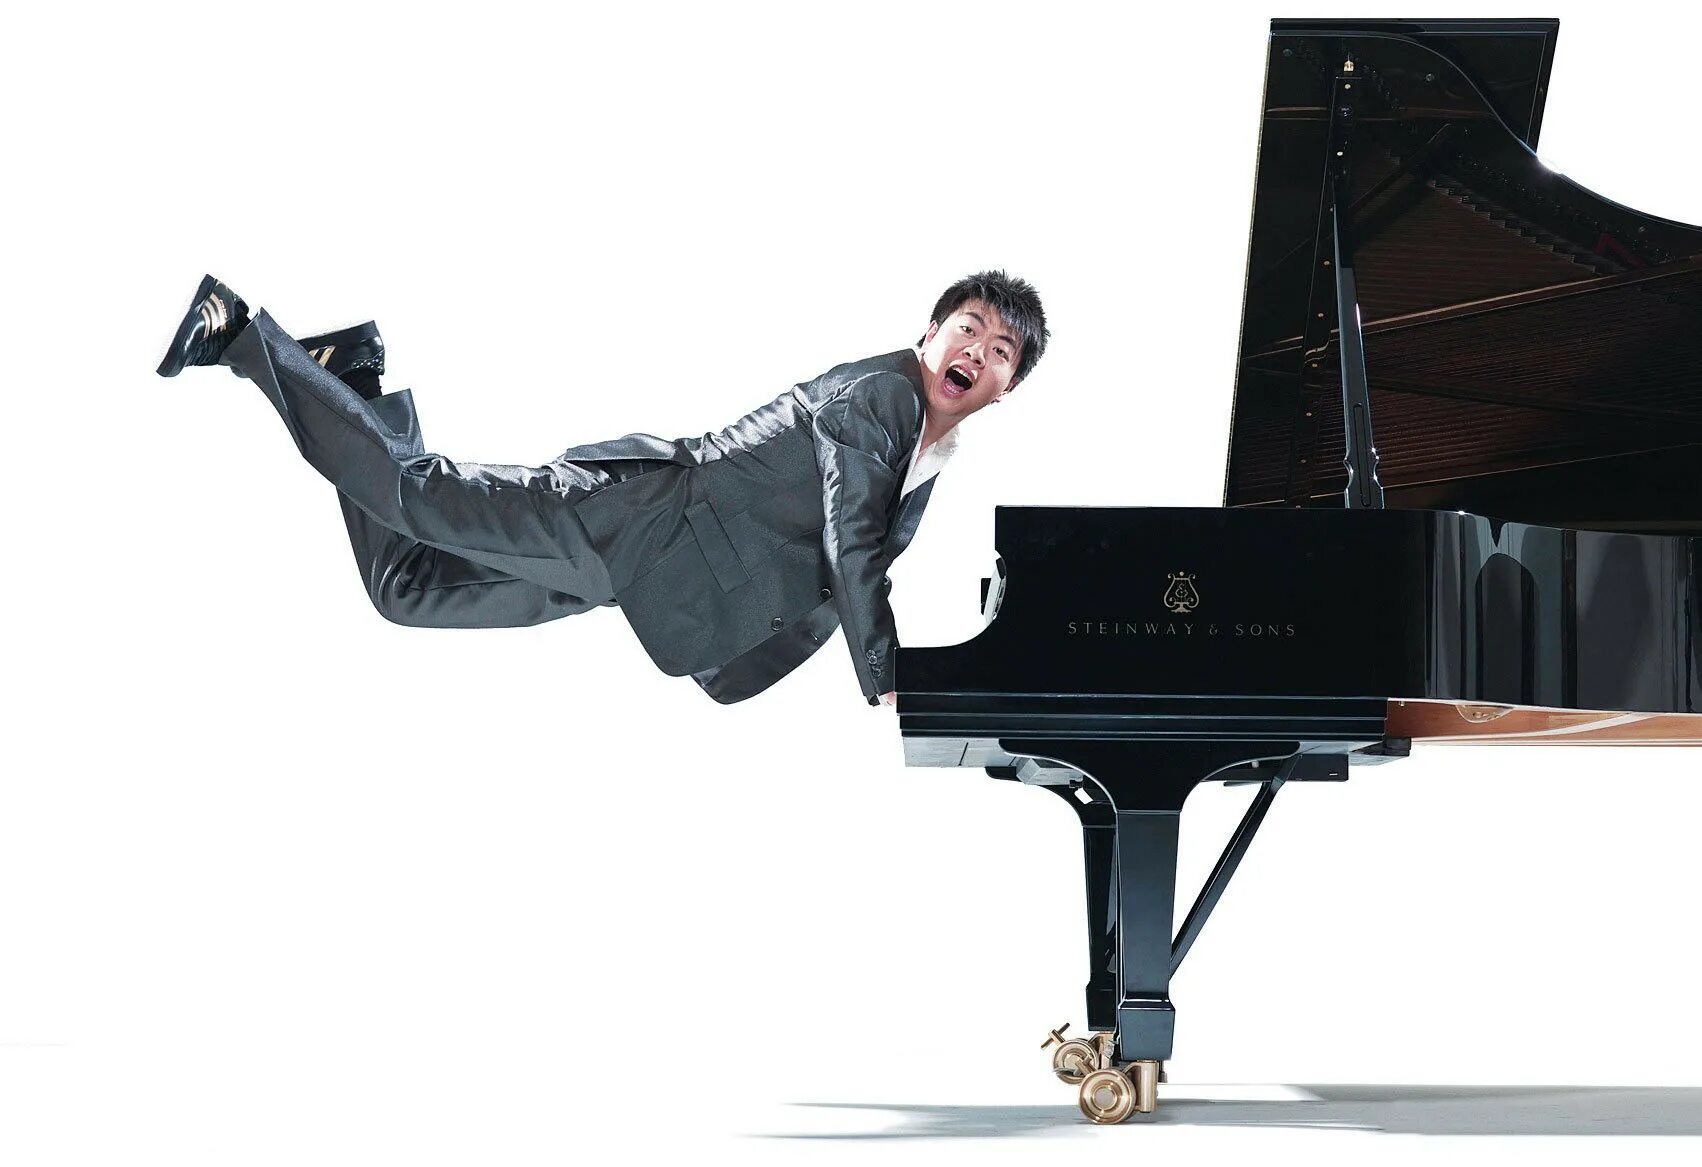 Tom plays piano. Ланг Ланг пианист. Лан Лан американский пианист. Ланг Ланг пианино. Пианист Ланг Ланг фото.